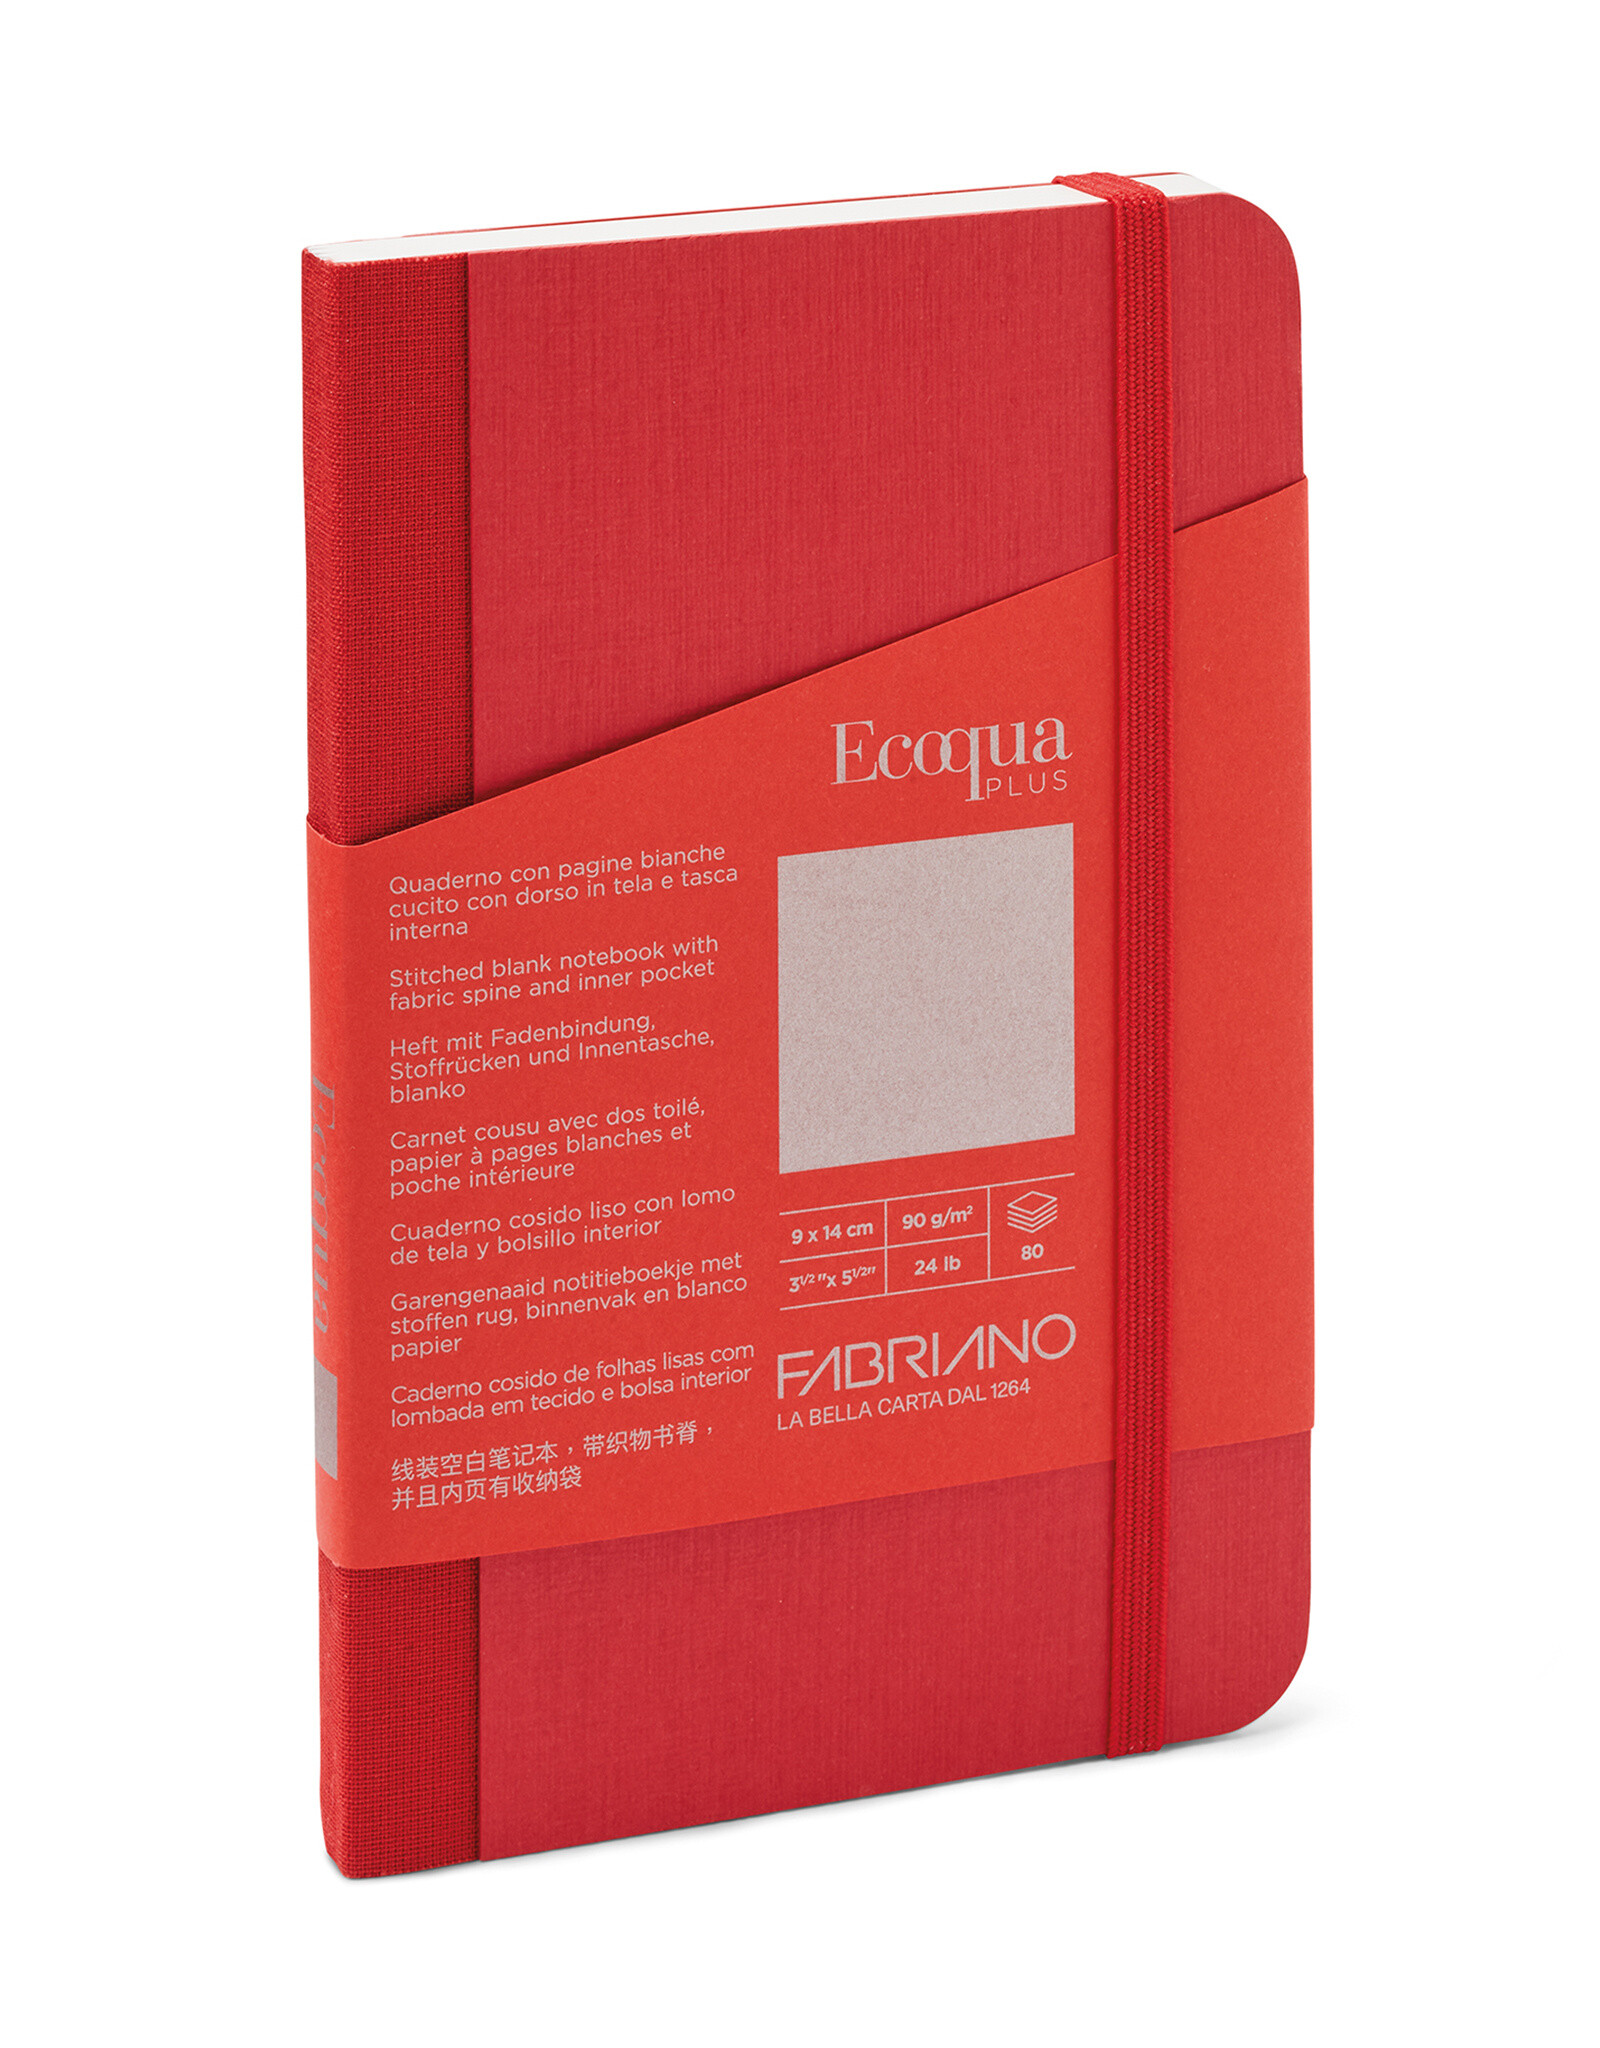 Ecoqua Plus Fabric Bound Notebook, Red, 3.5” x 5.5”, Blank